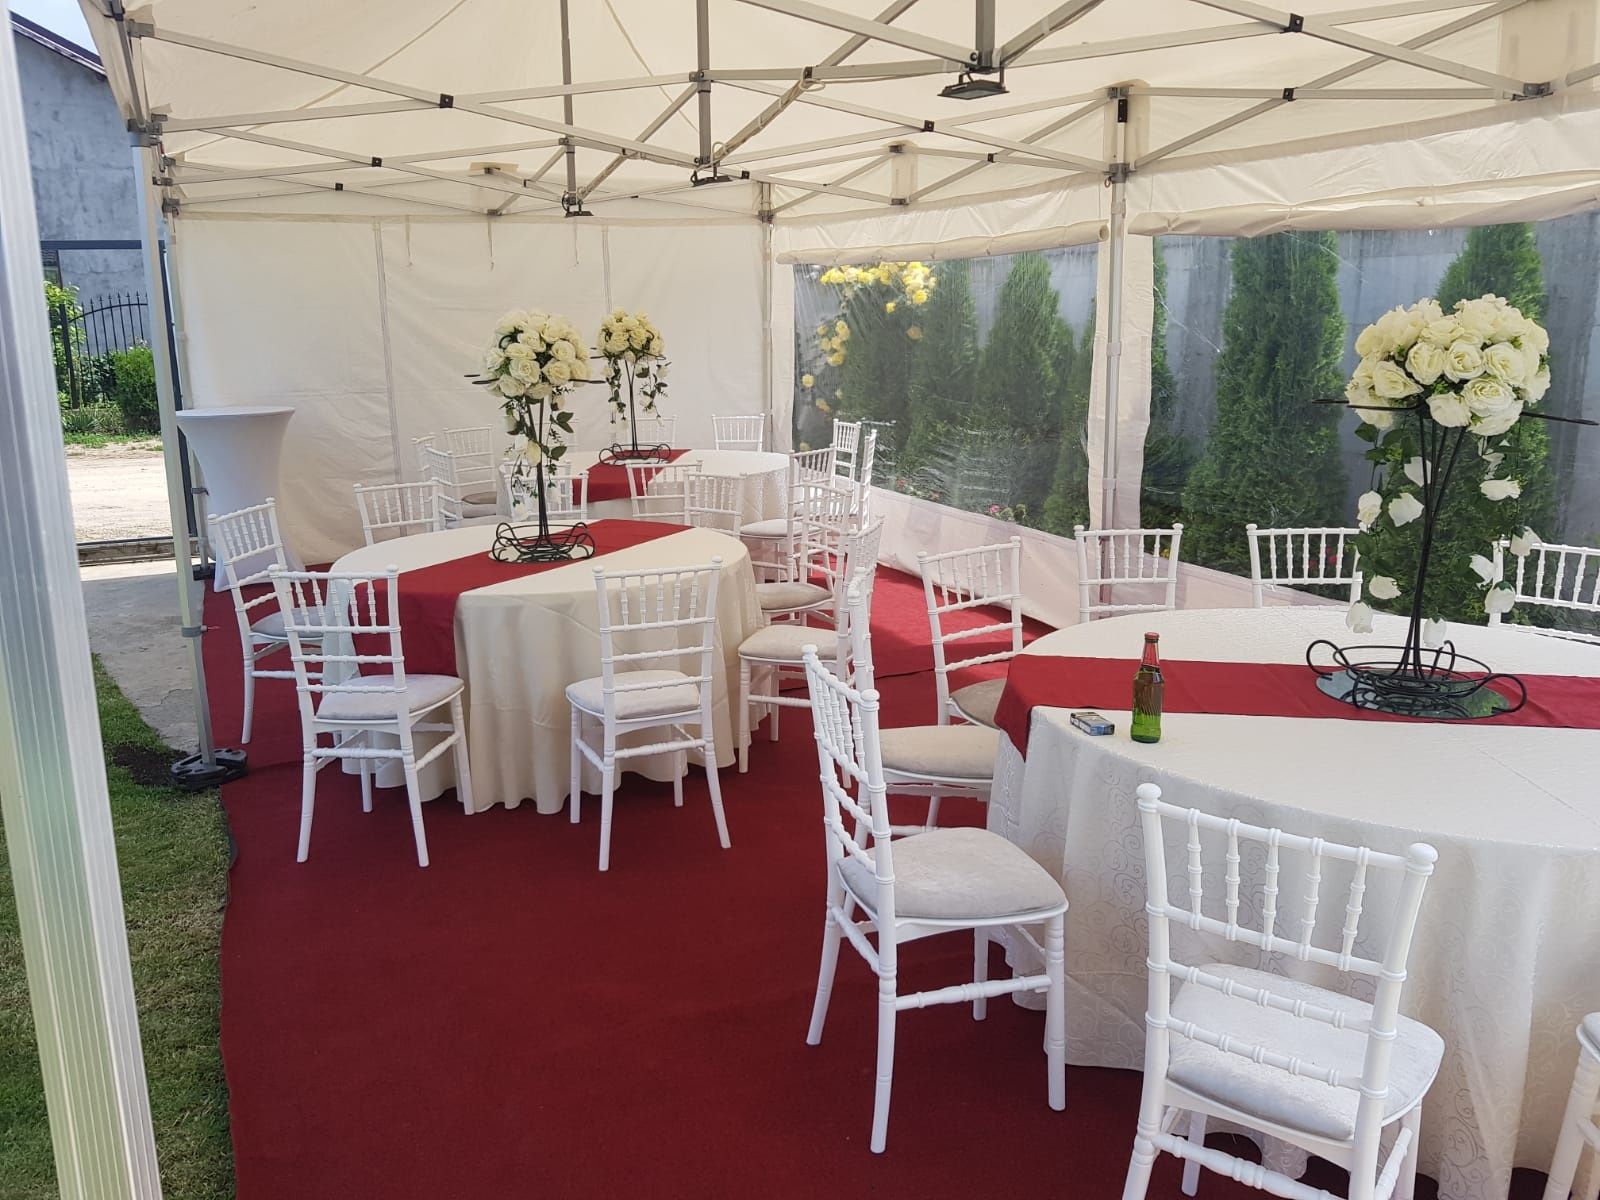 Inchiriem corturi pentru nunti evenimente diverse cu podea 18 mm